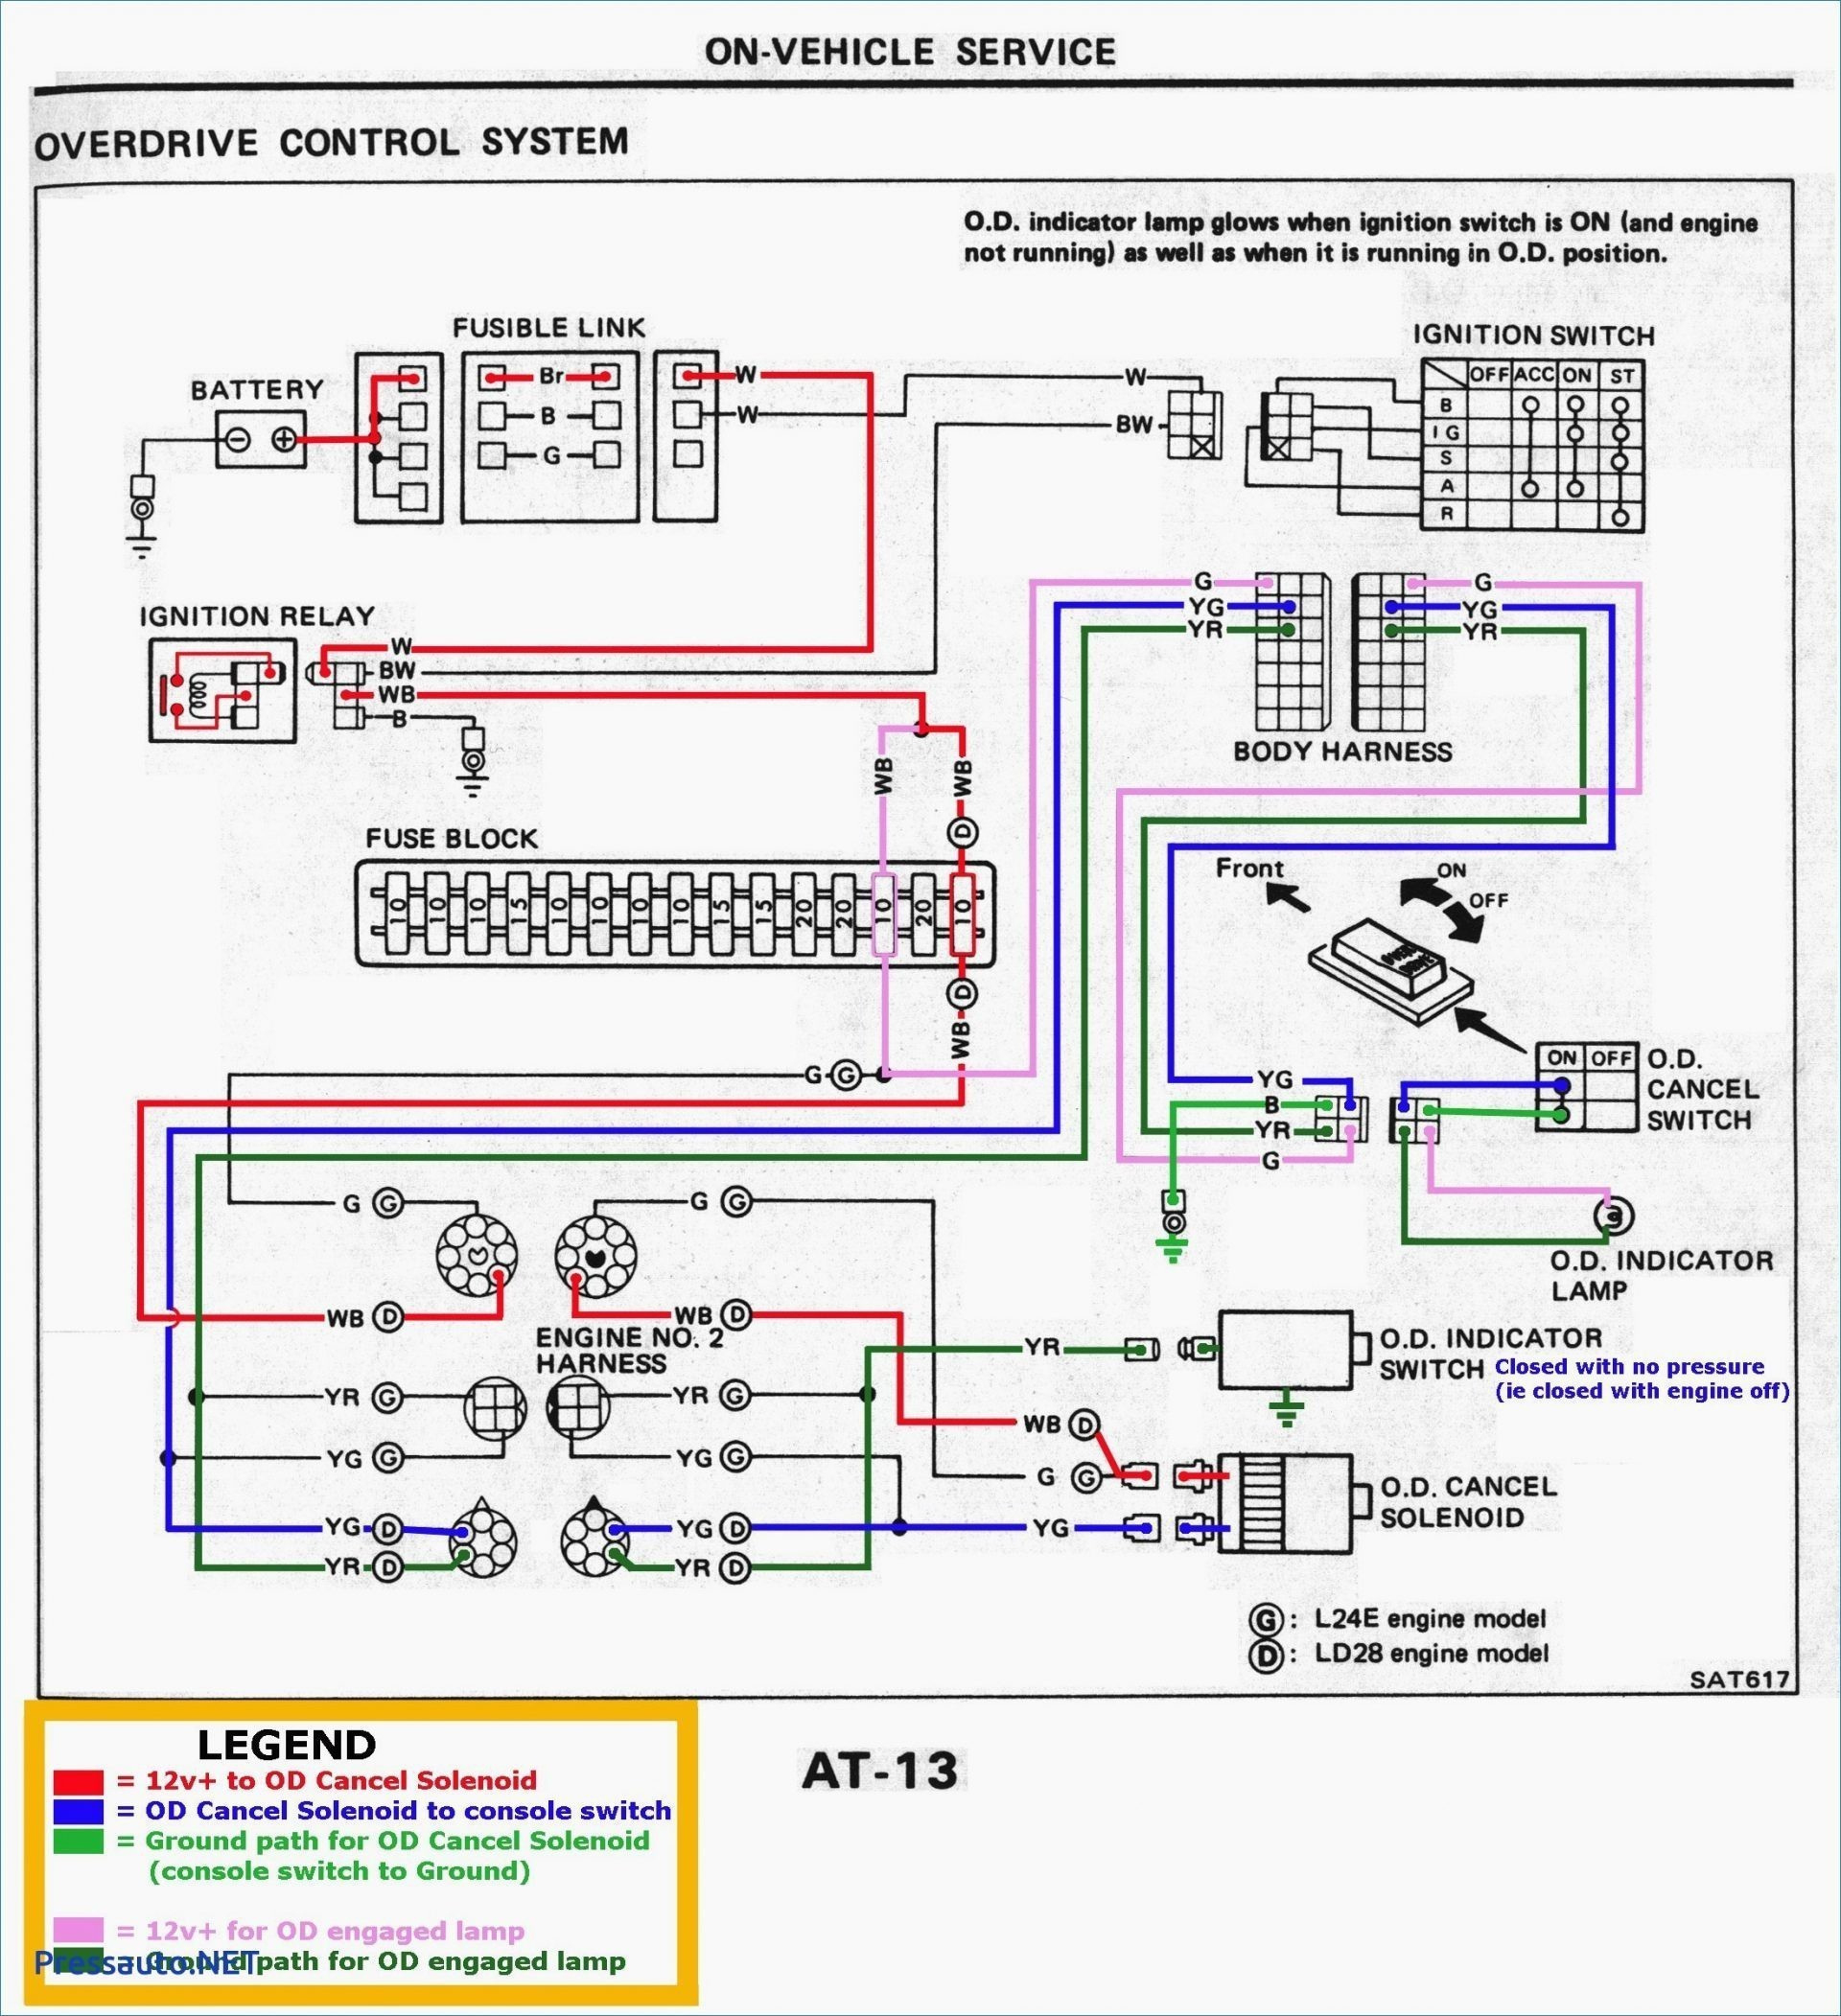 Simple House Wiring Pdf - Wiring Diagram Description - Simple House Wiring Diagram Examples